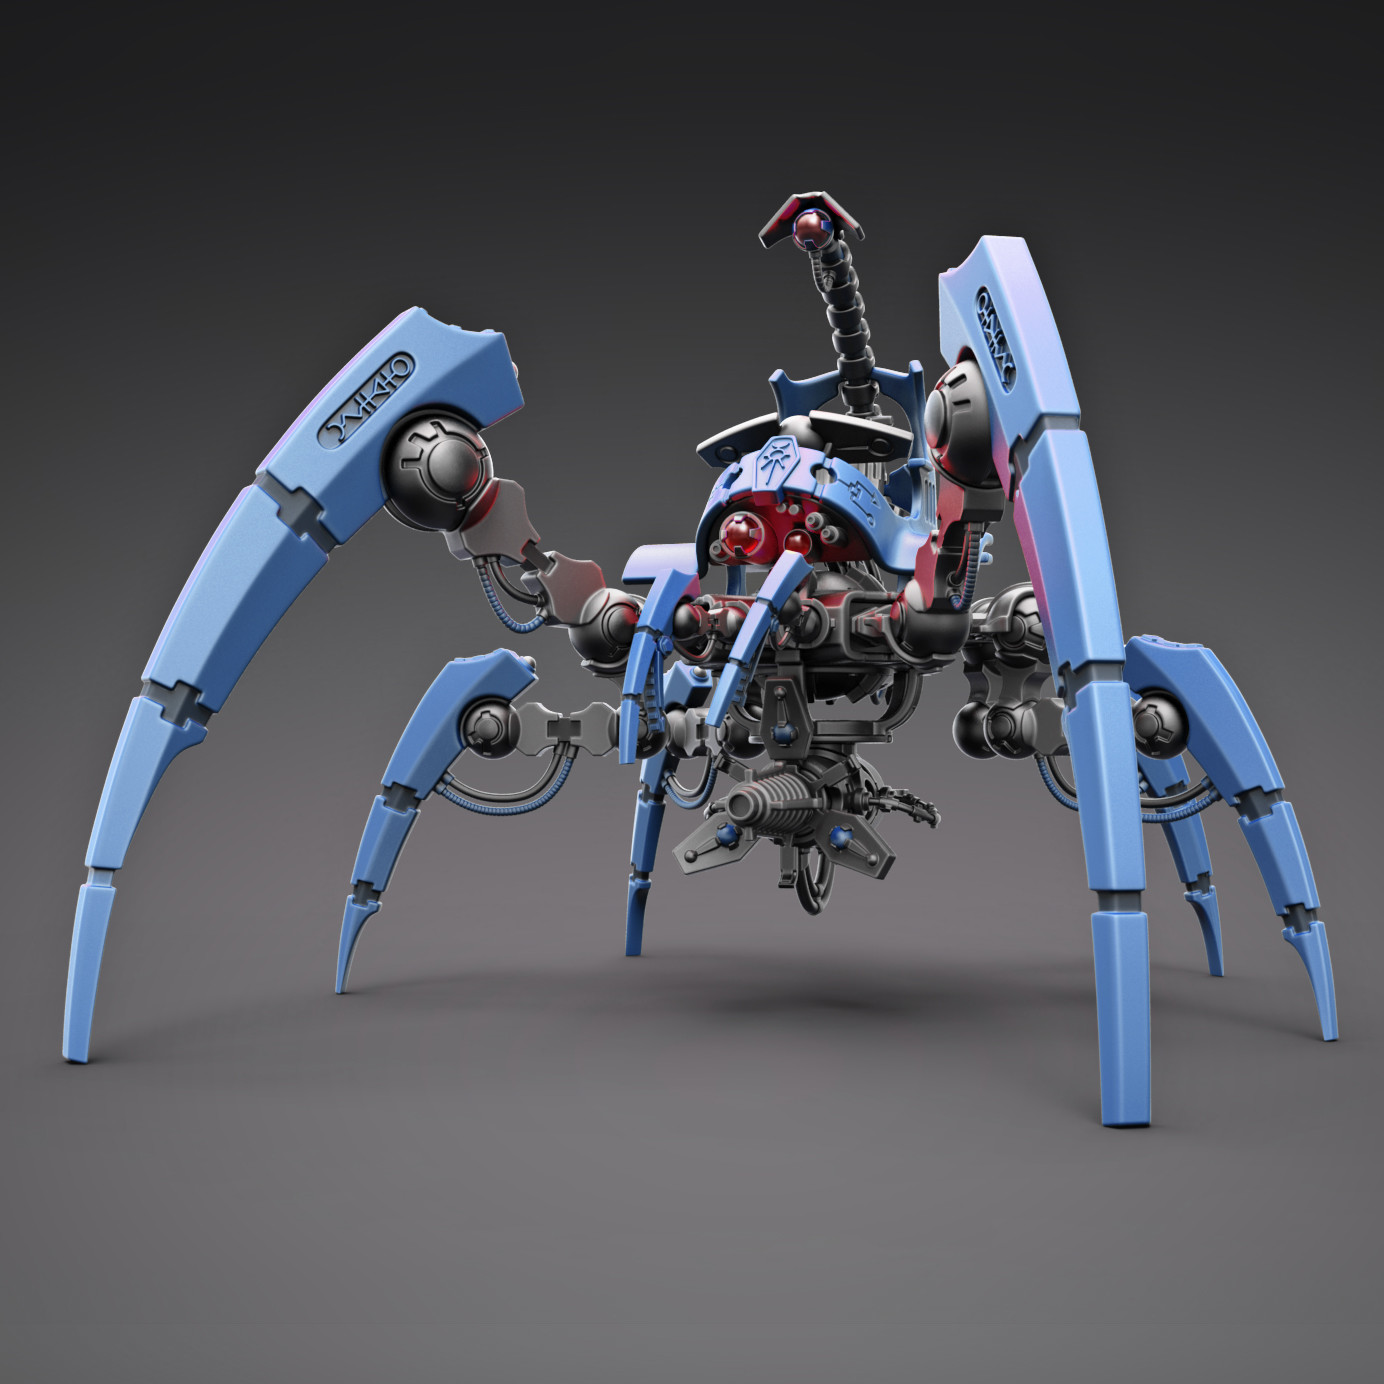 Arte робот. Робот паук t8x. Робот паук концепт арт. Робот паук Cyberpunk. Робопаук Мантис.